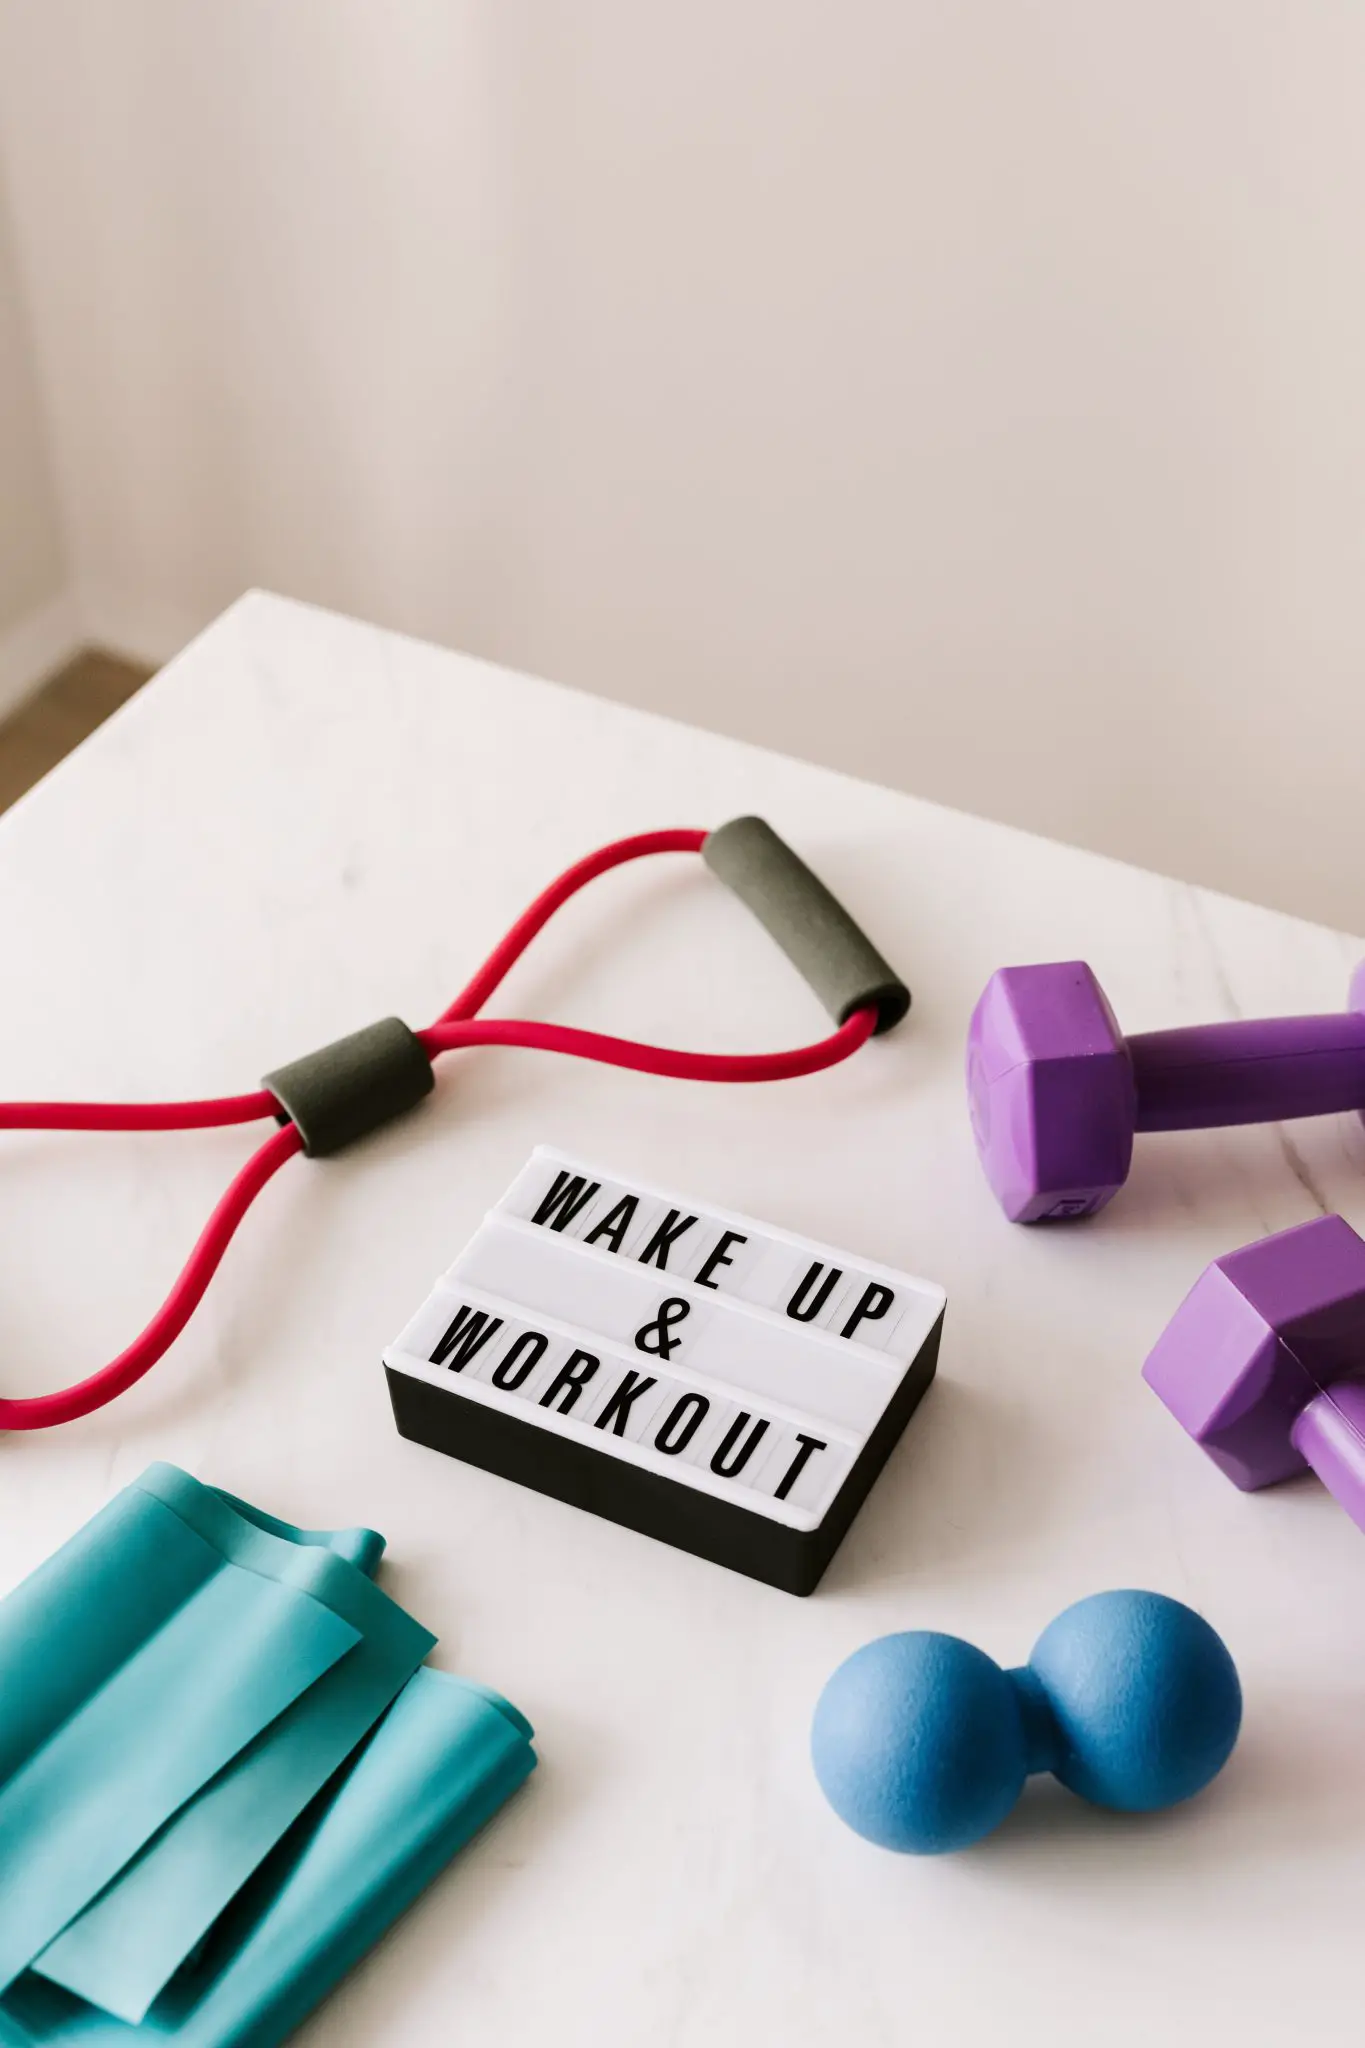 wake-up-and-workout-slogan-on-light-box-among-sports-equipment